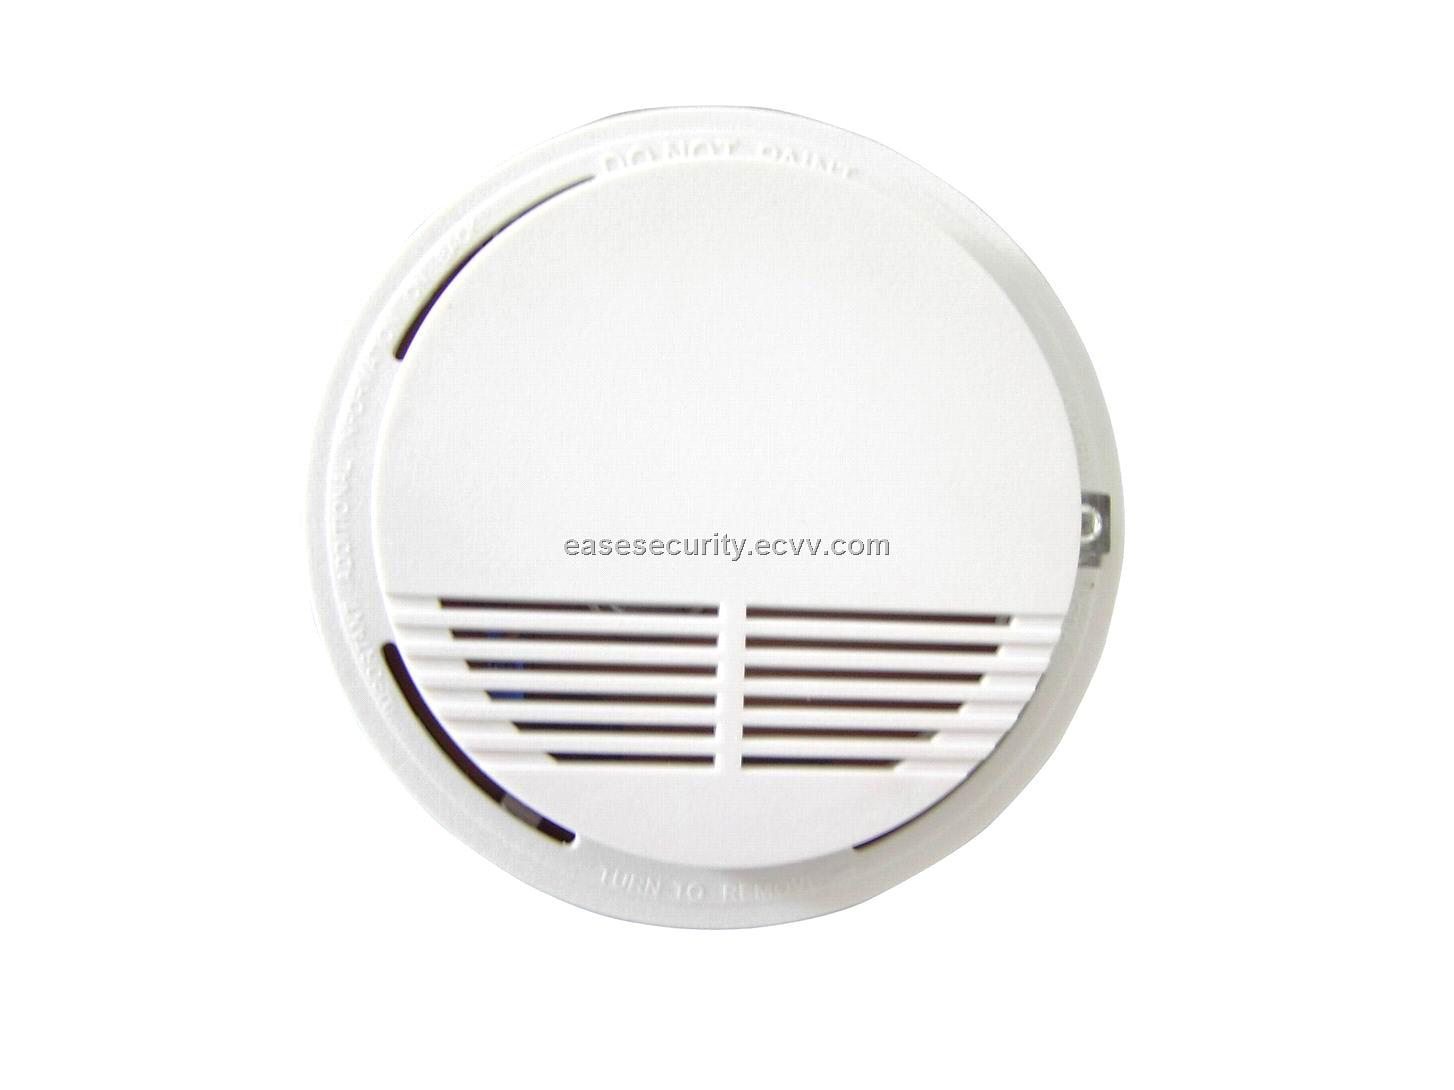 optical wireless smoke detector smoke alarm sensor